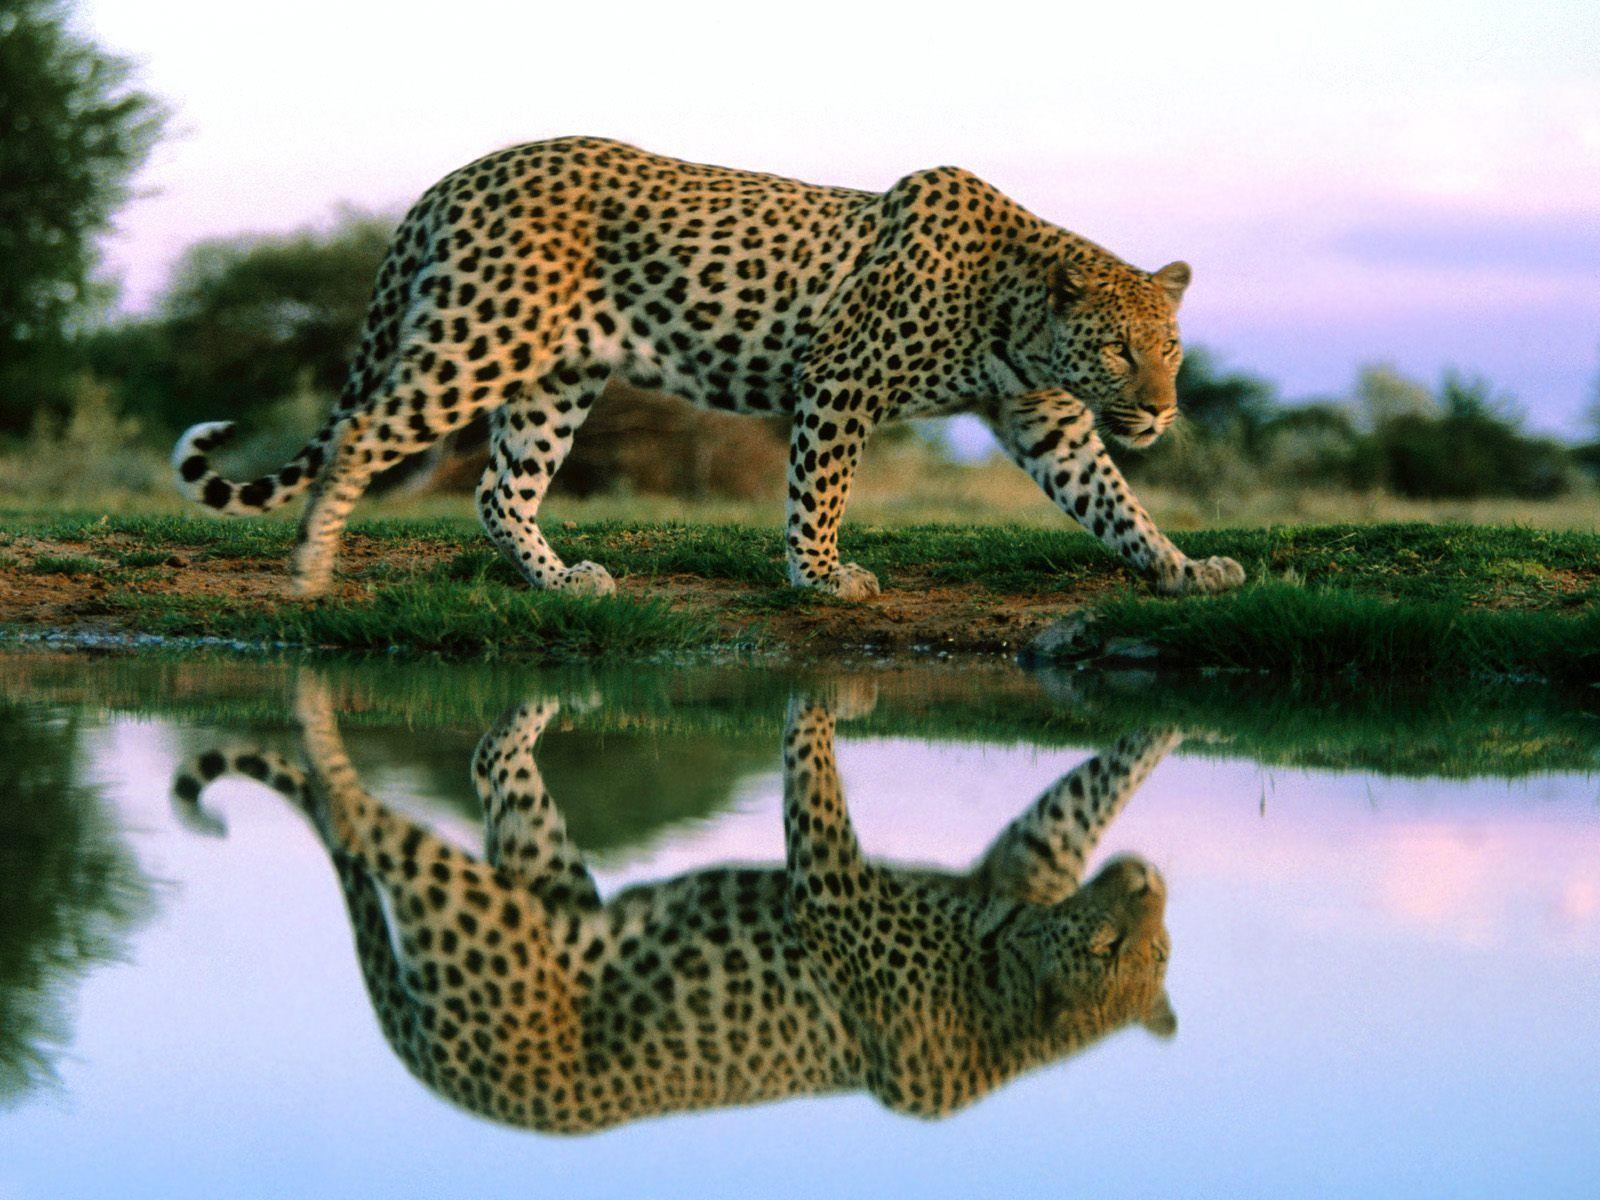 Wild Animals In Africa Background 1 HD Wallpaper. lzamgs